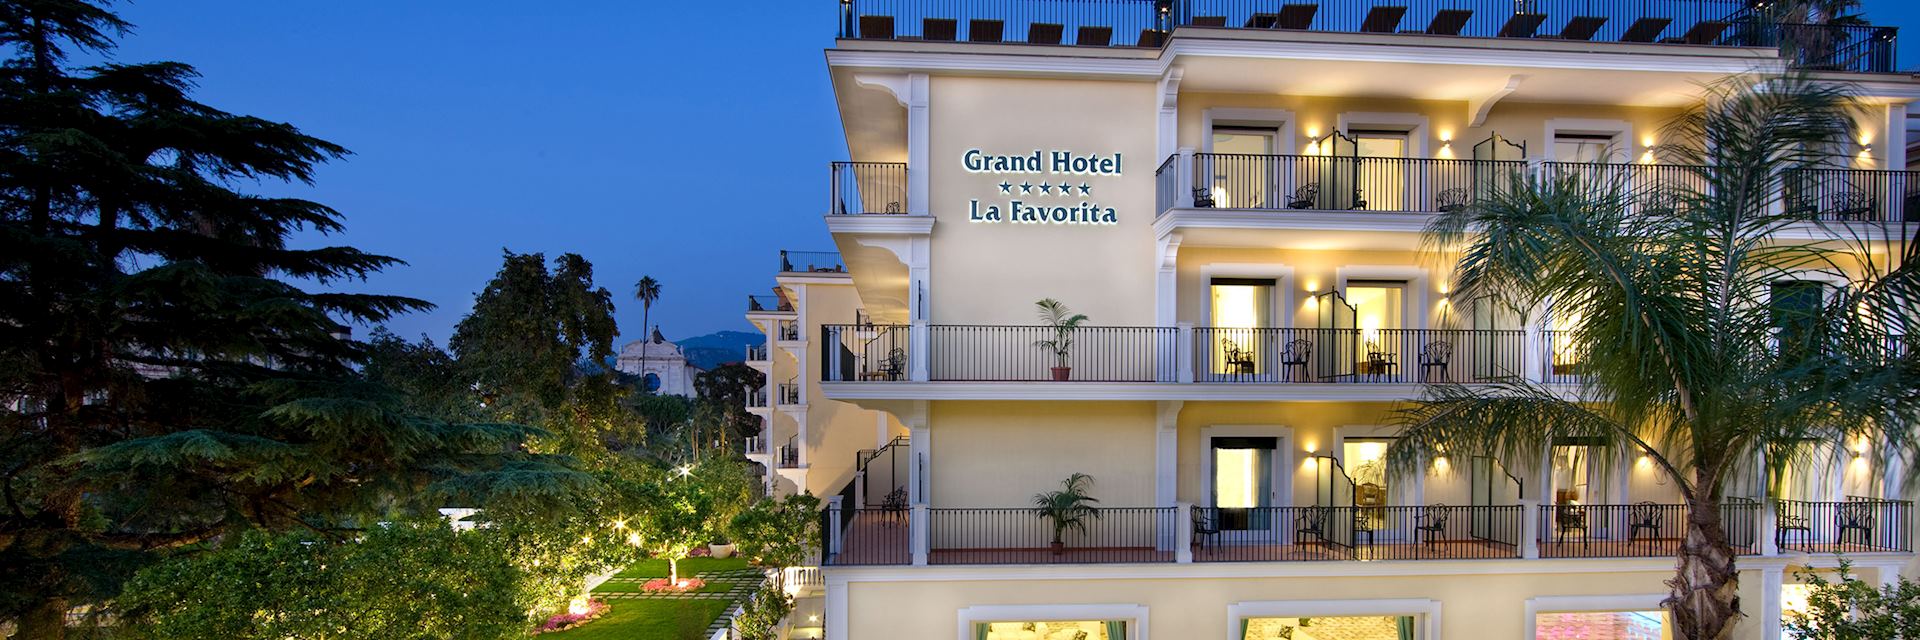 Grand Hotel la Favorita, Sorrento